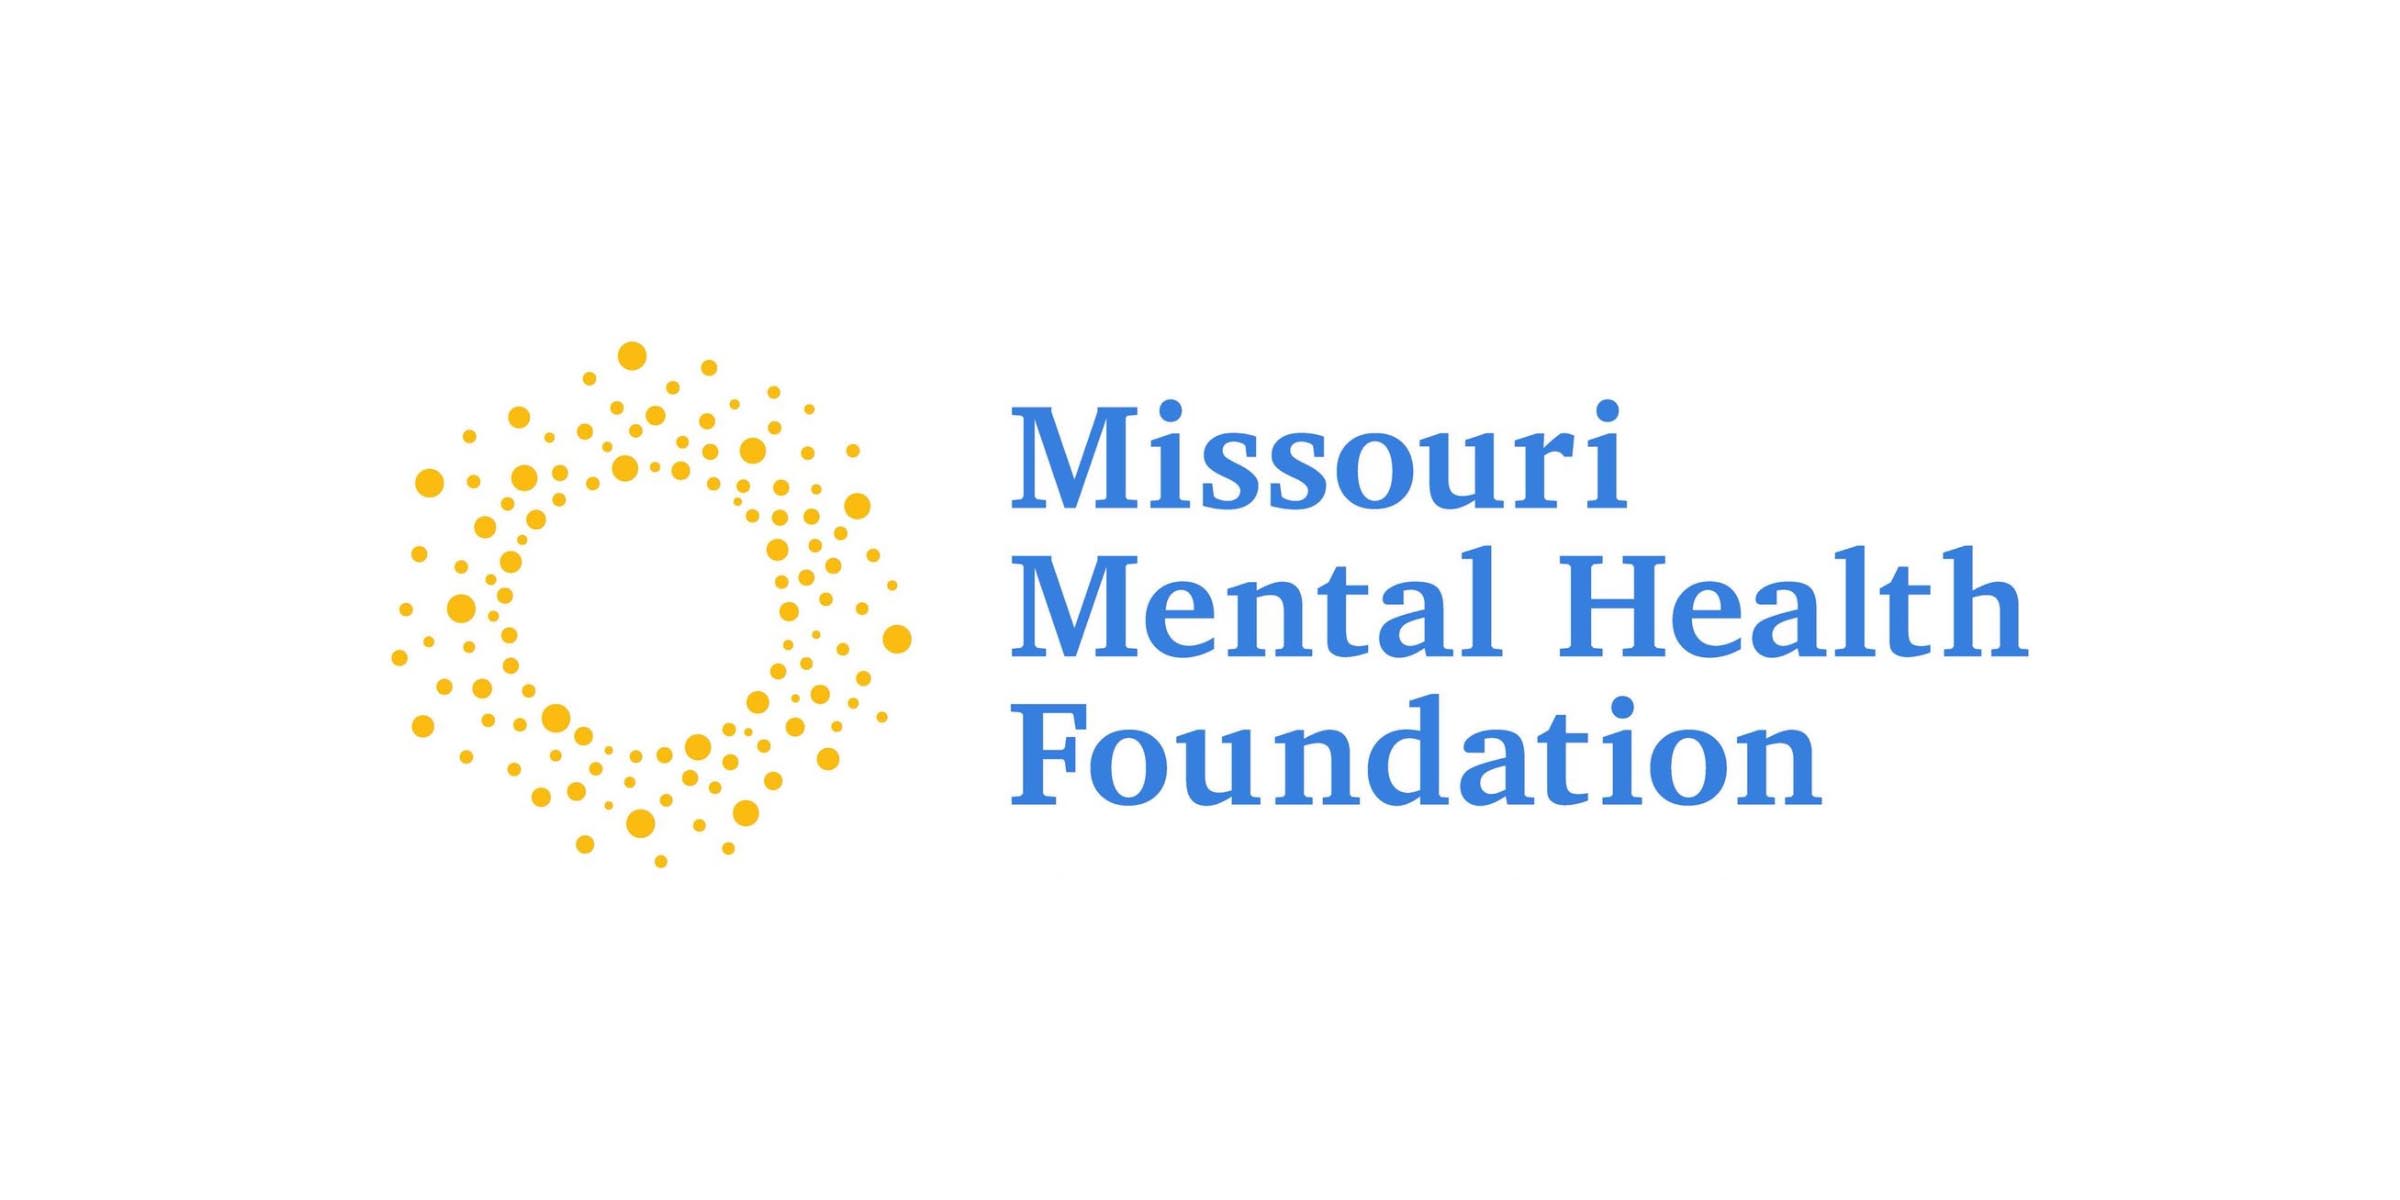 Missouri Mental Health Foundation Katie Andrews v1